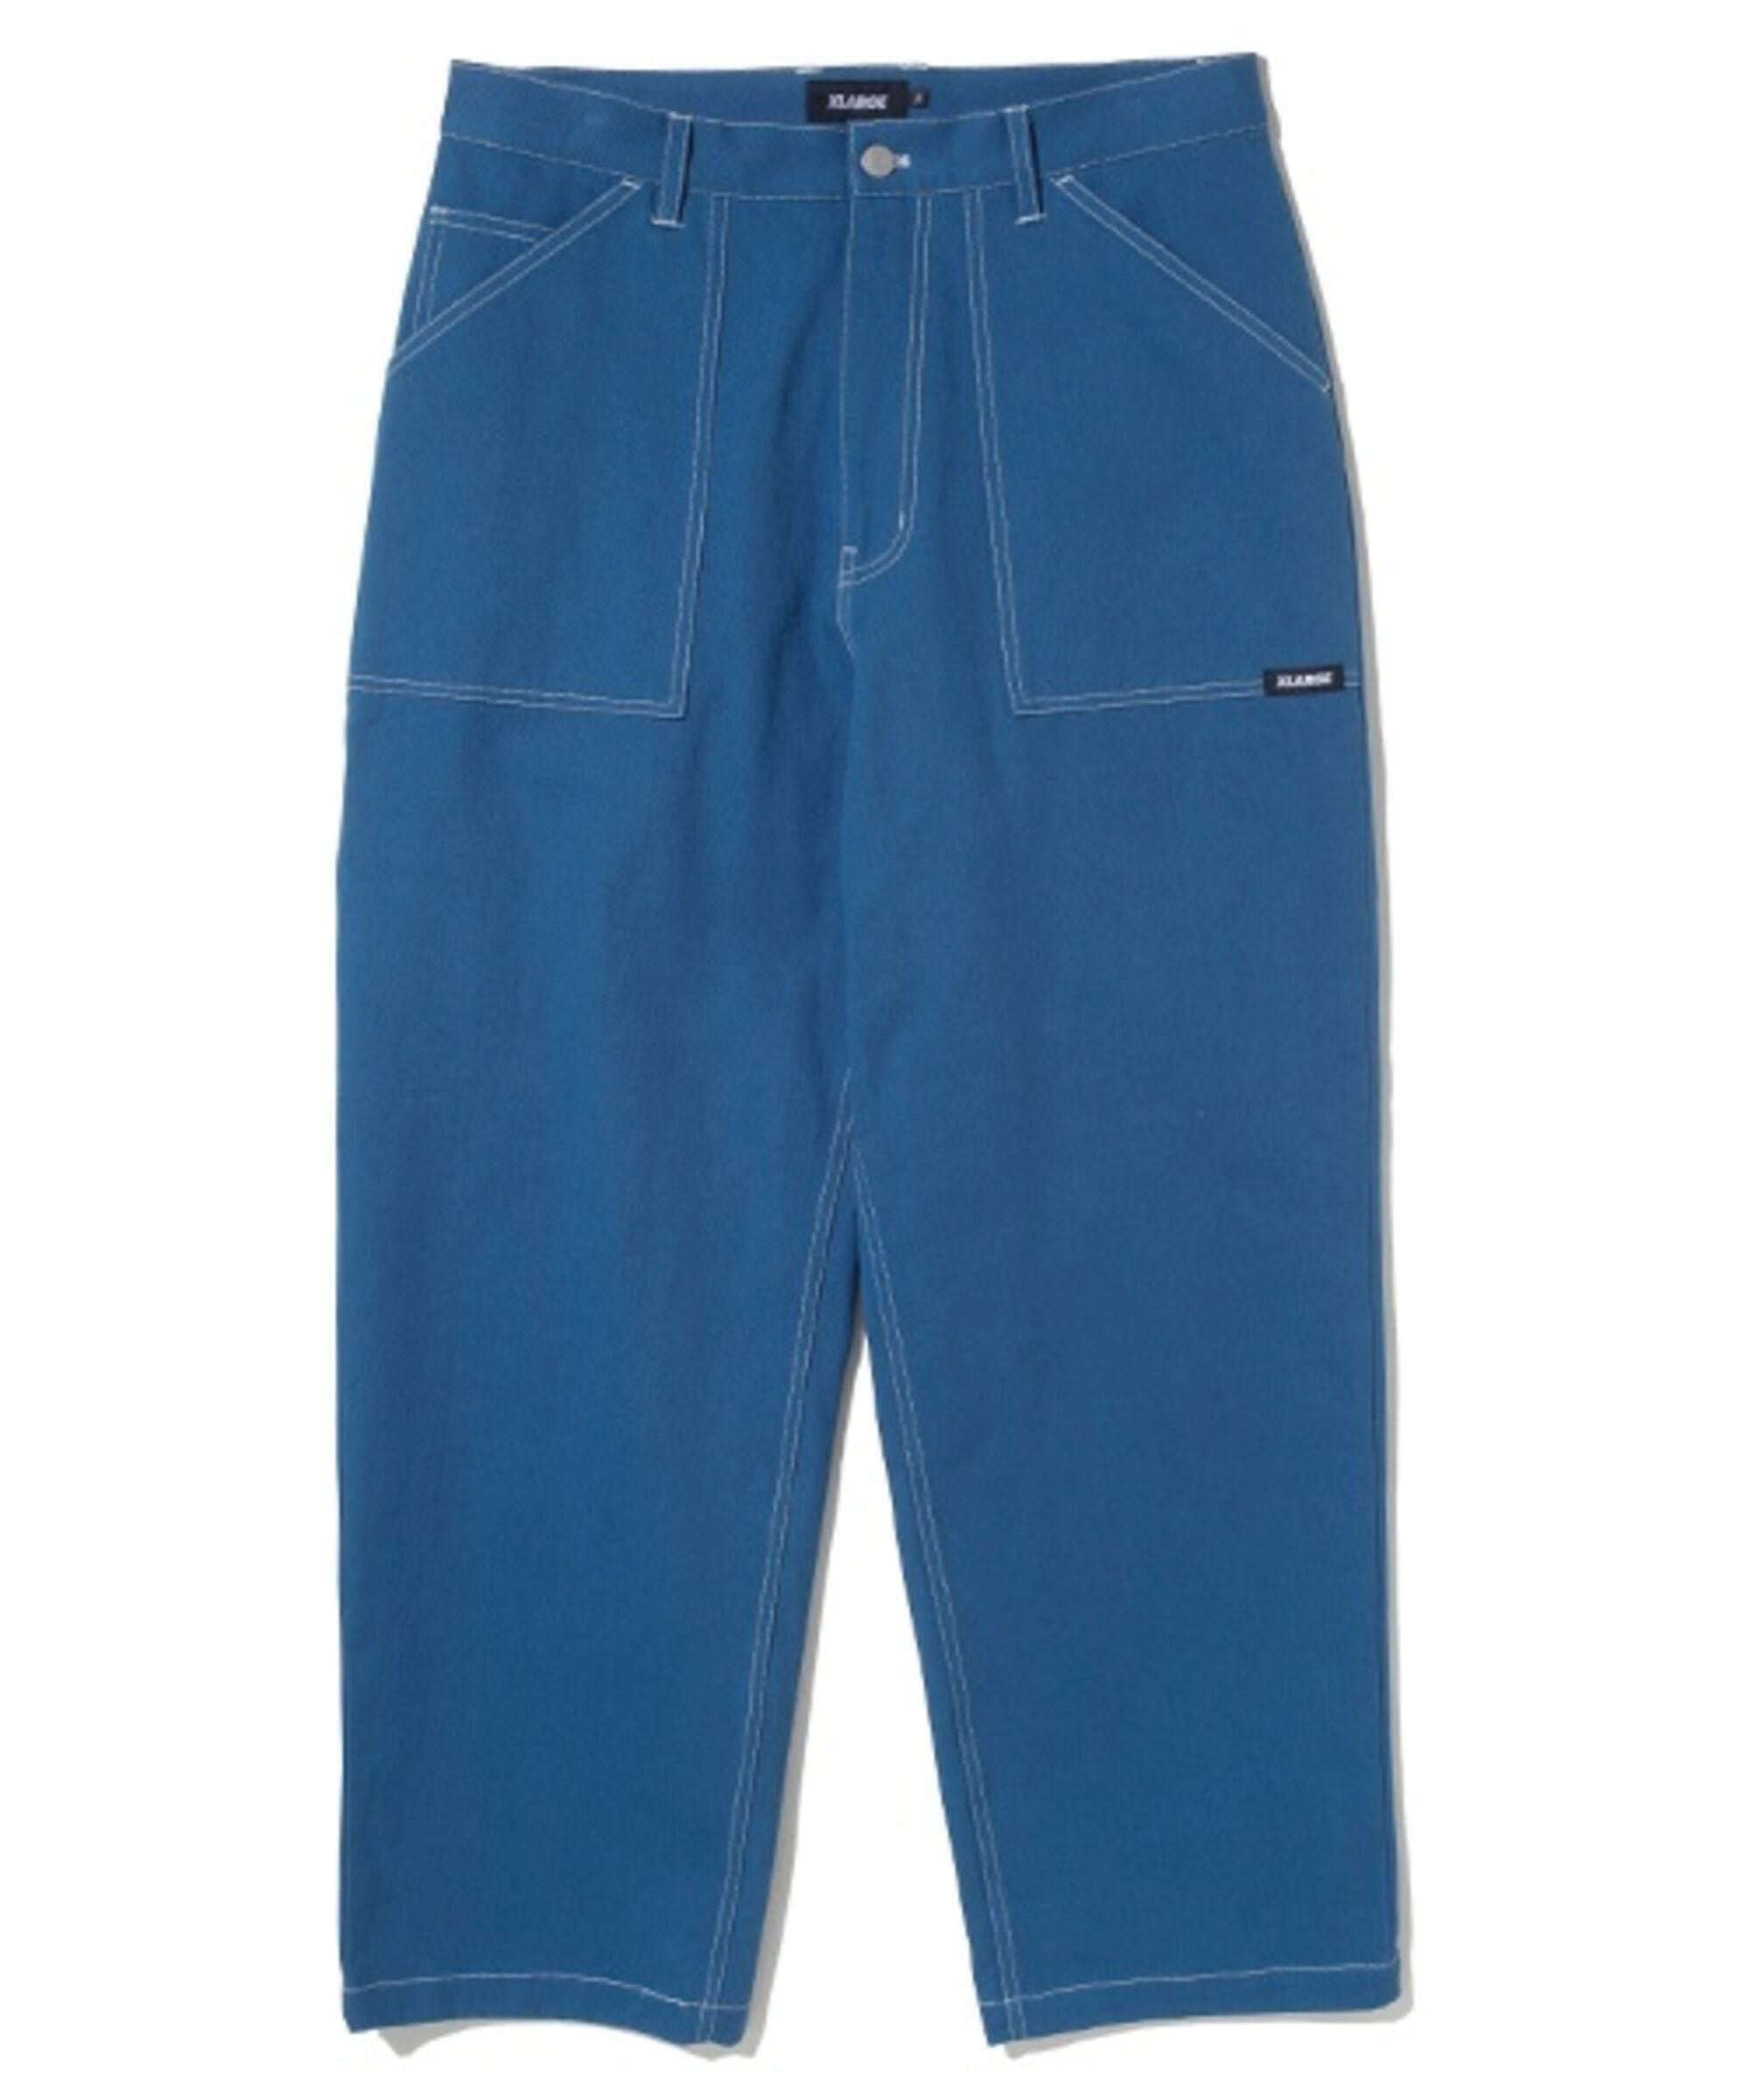 XLarge Stitched Baker Work Pants - Blue